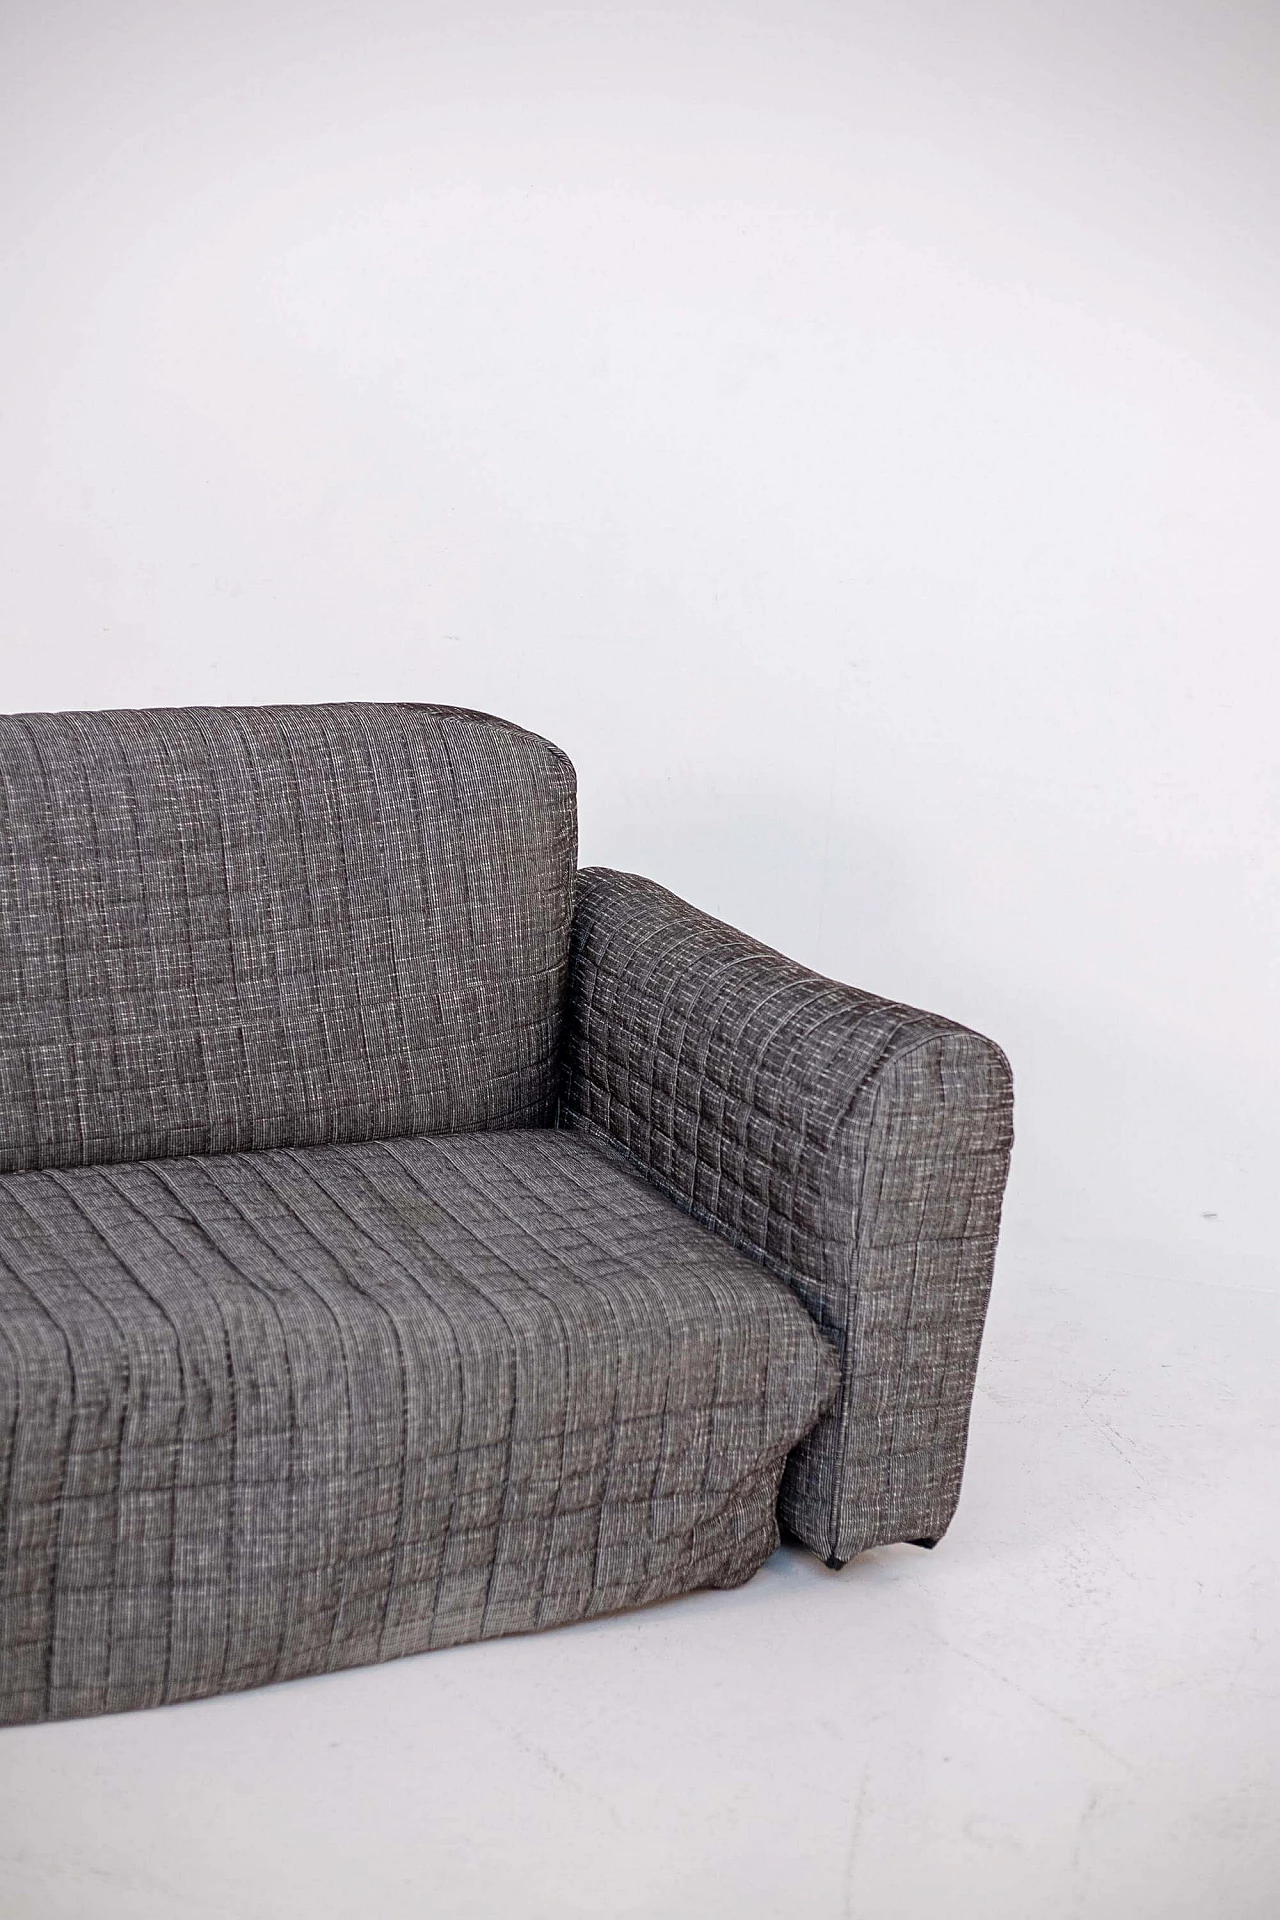 Cannaregio grey fabric sofa by Gaetano Pesce for Cassina, 1980s 1383730